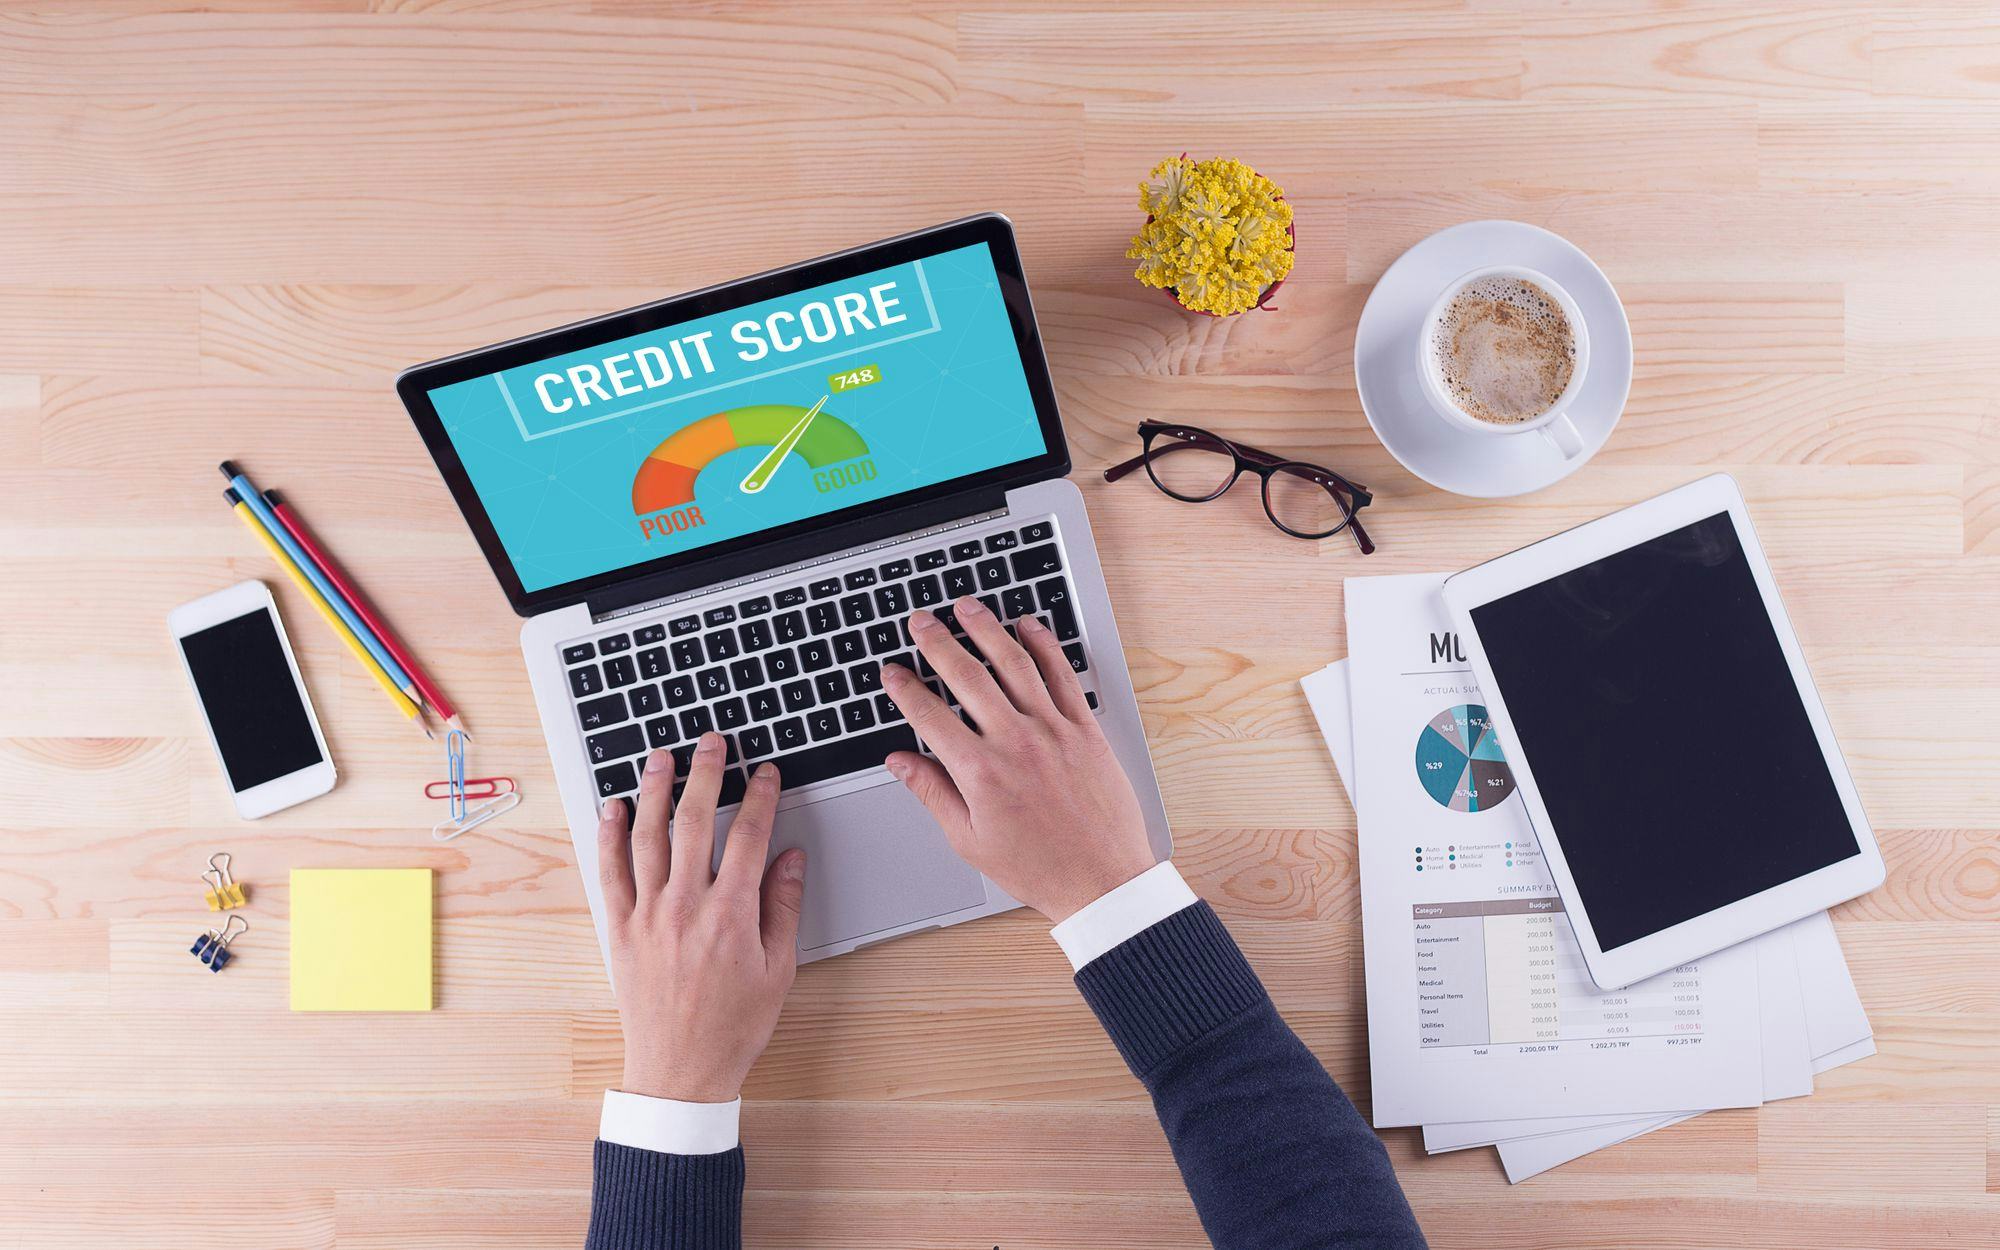 Crazy credit score myths